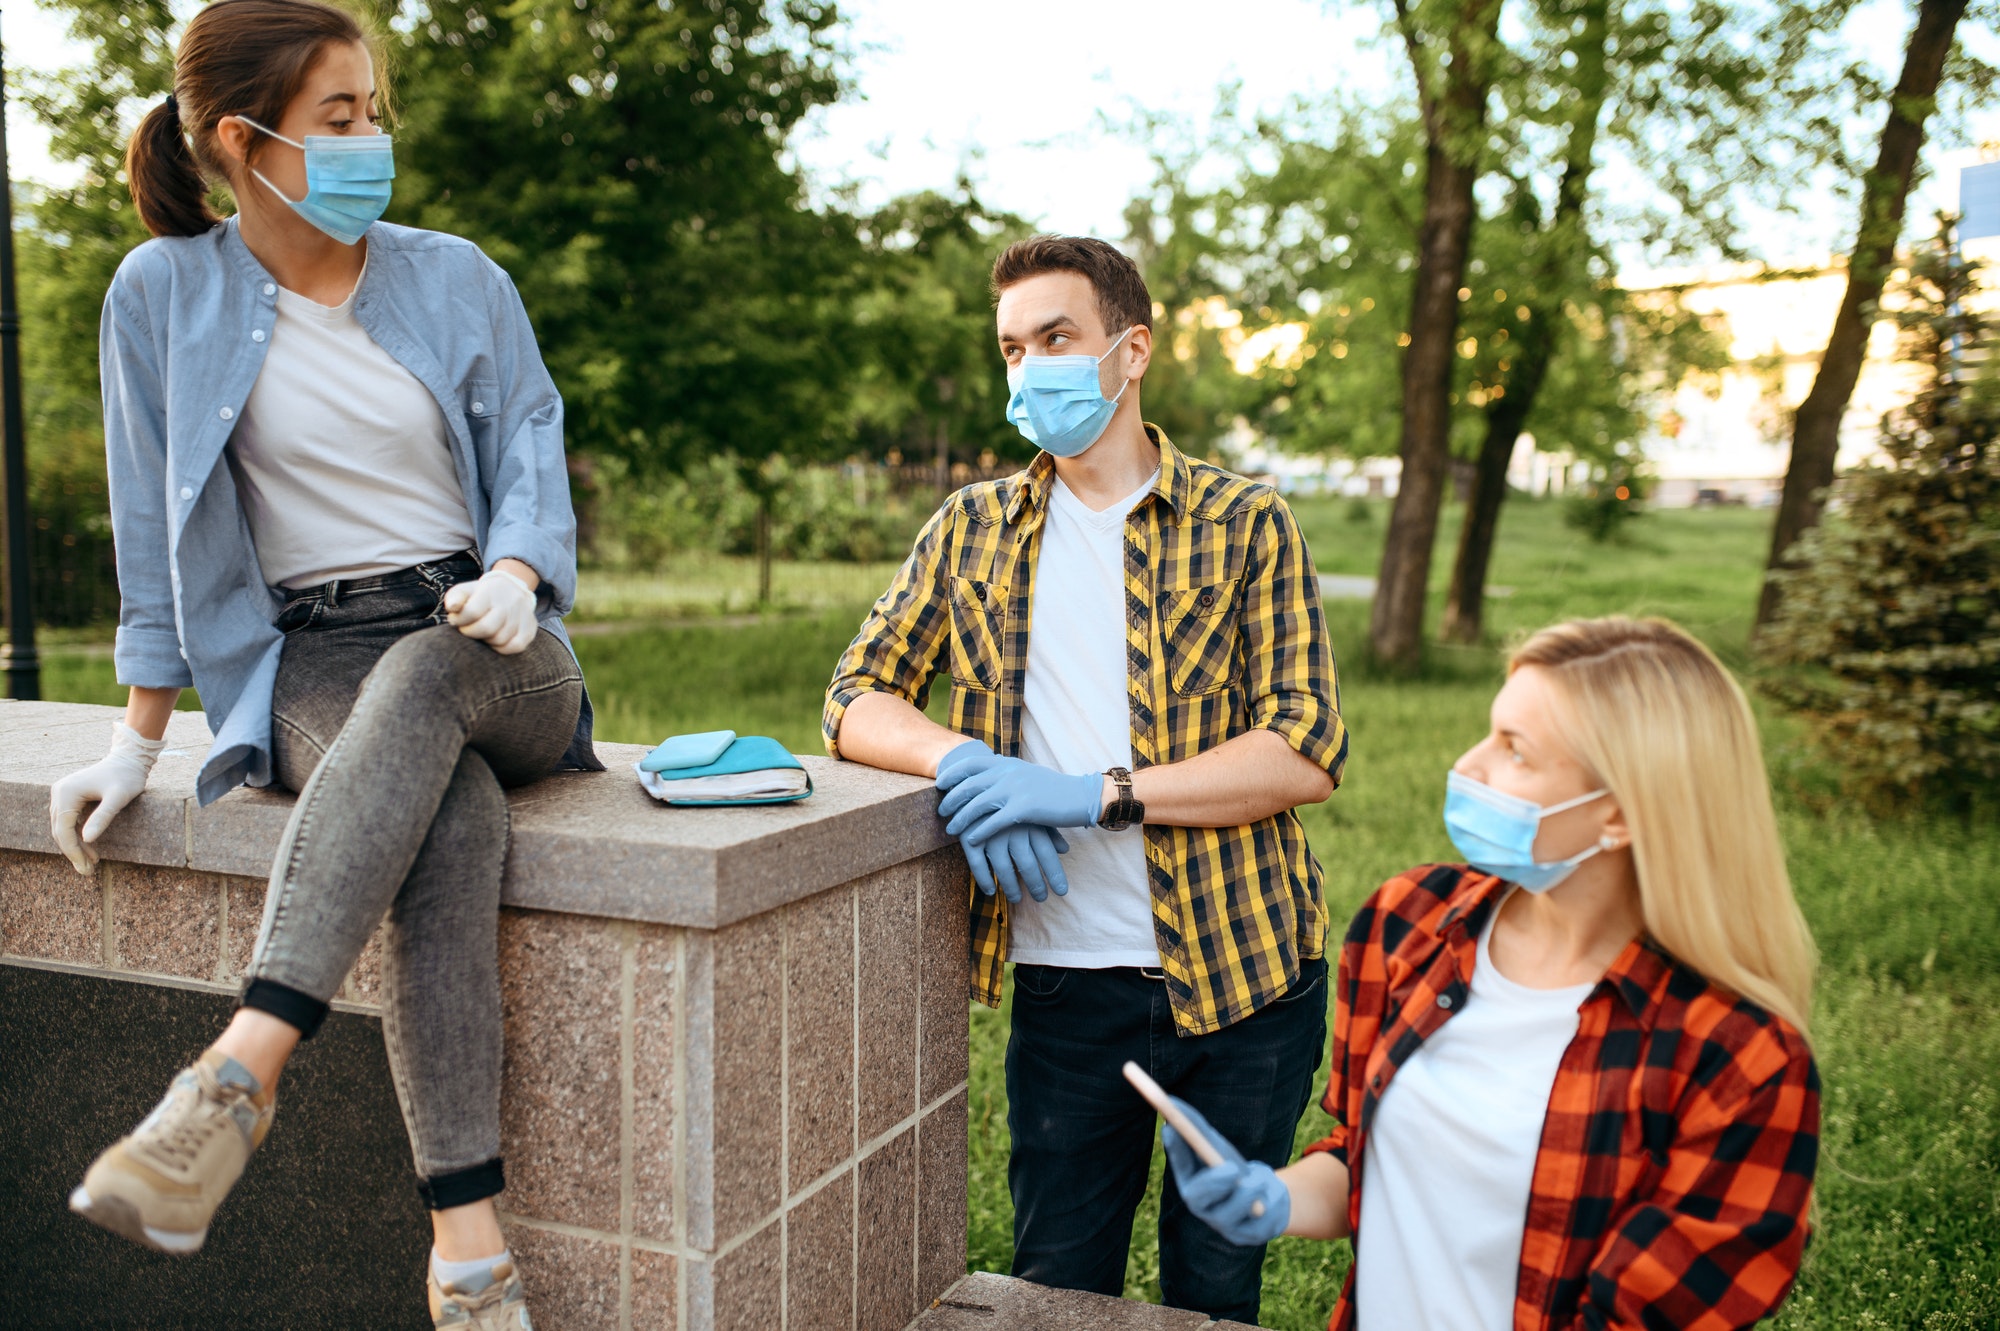 Friends in masks leisures in park, quarantine